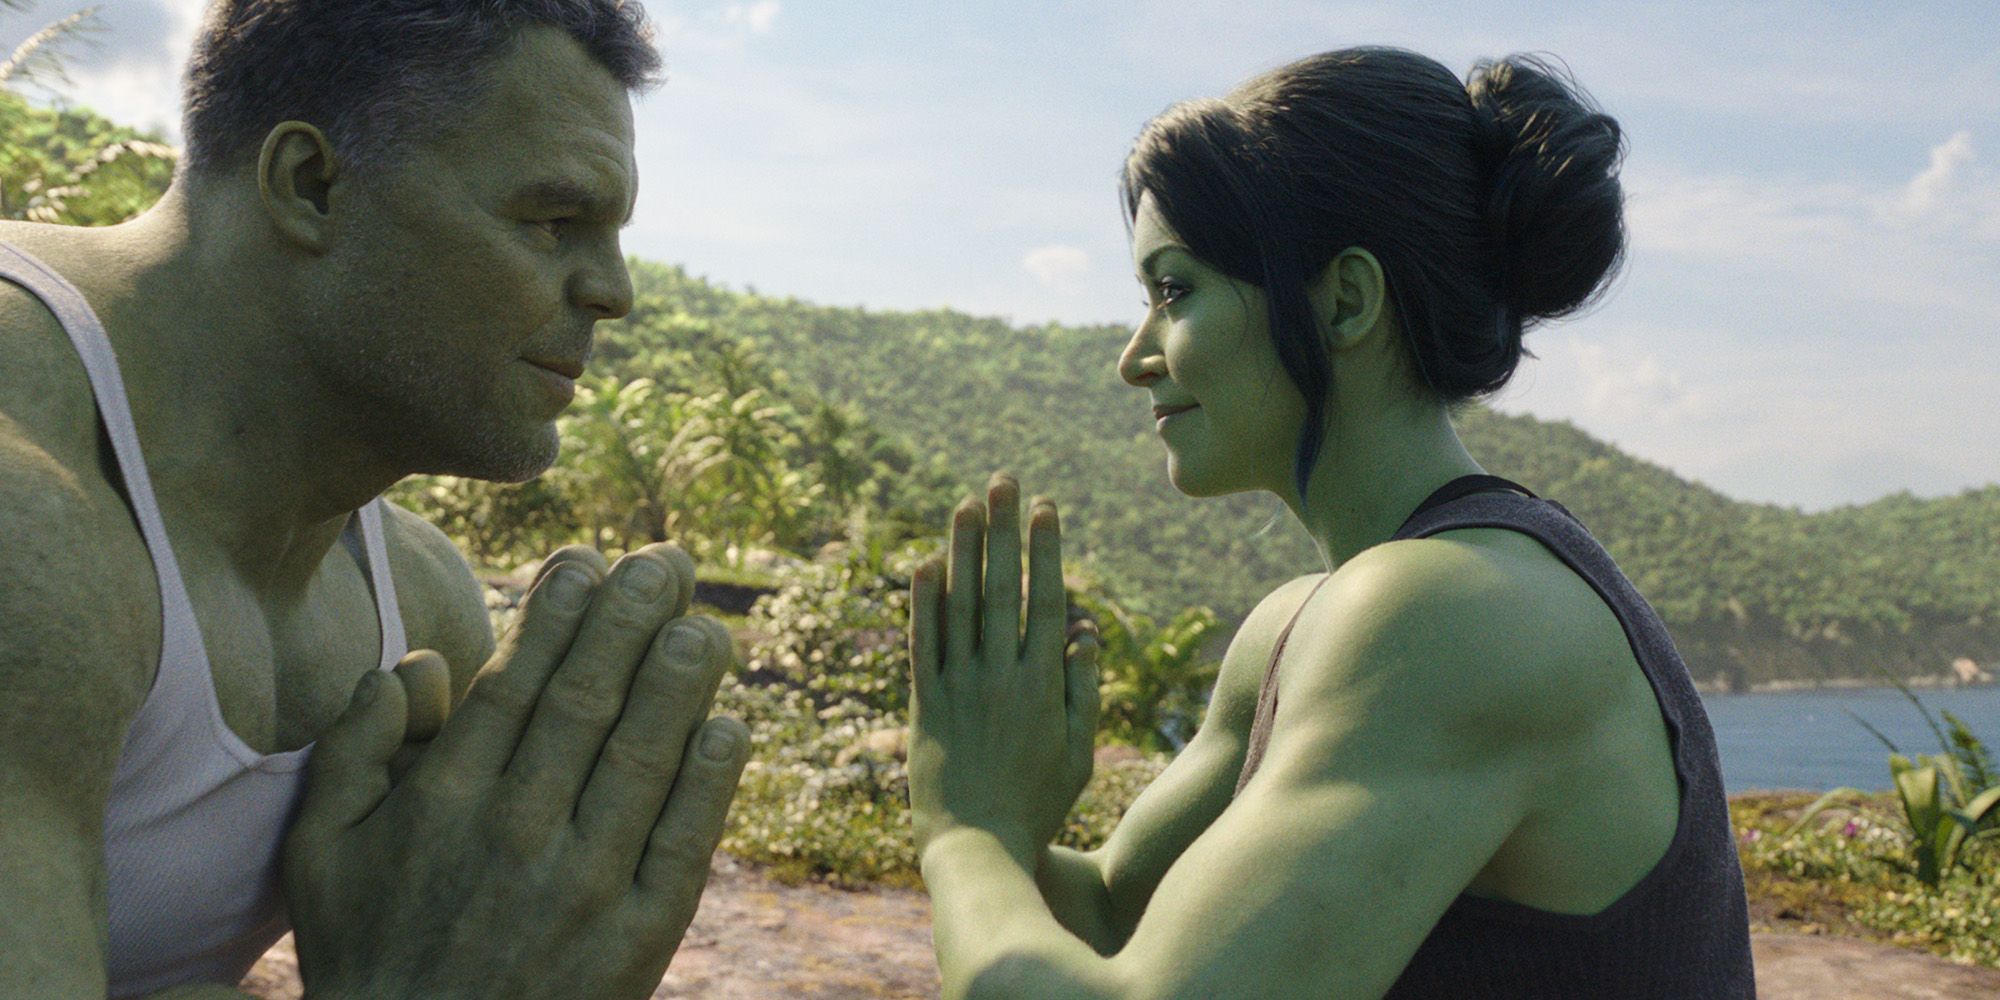 She-Hulk-Episode-1-Bruce-Banner-Jennifer-Walters-training-on-beach-island-1